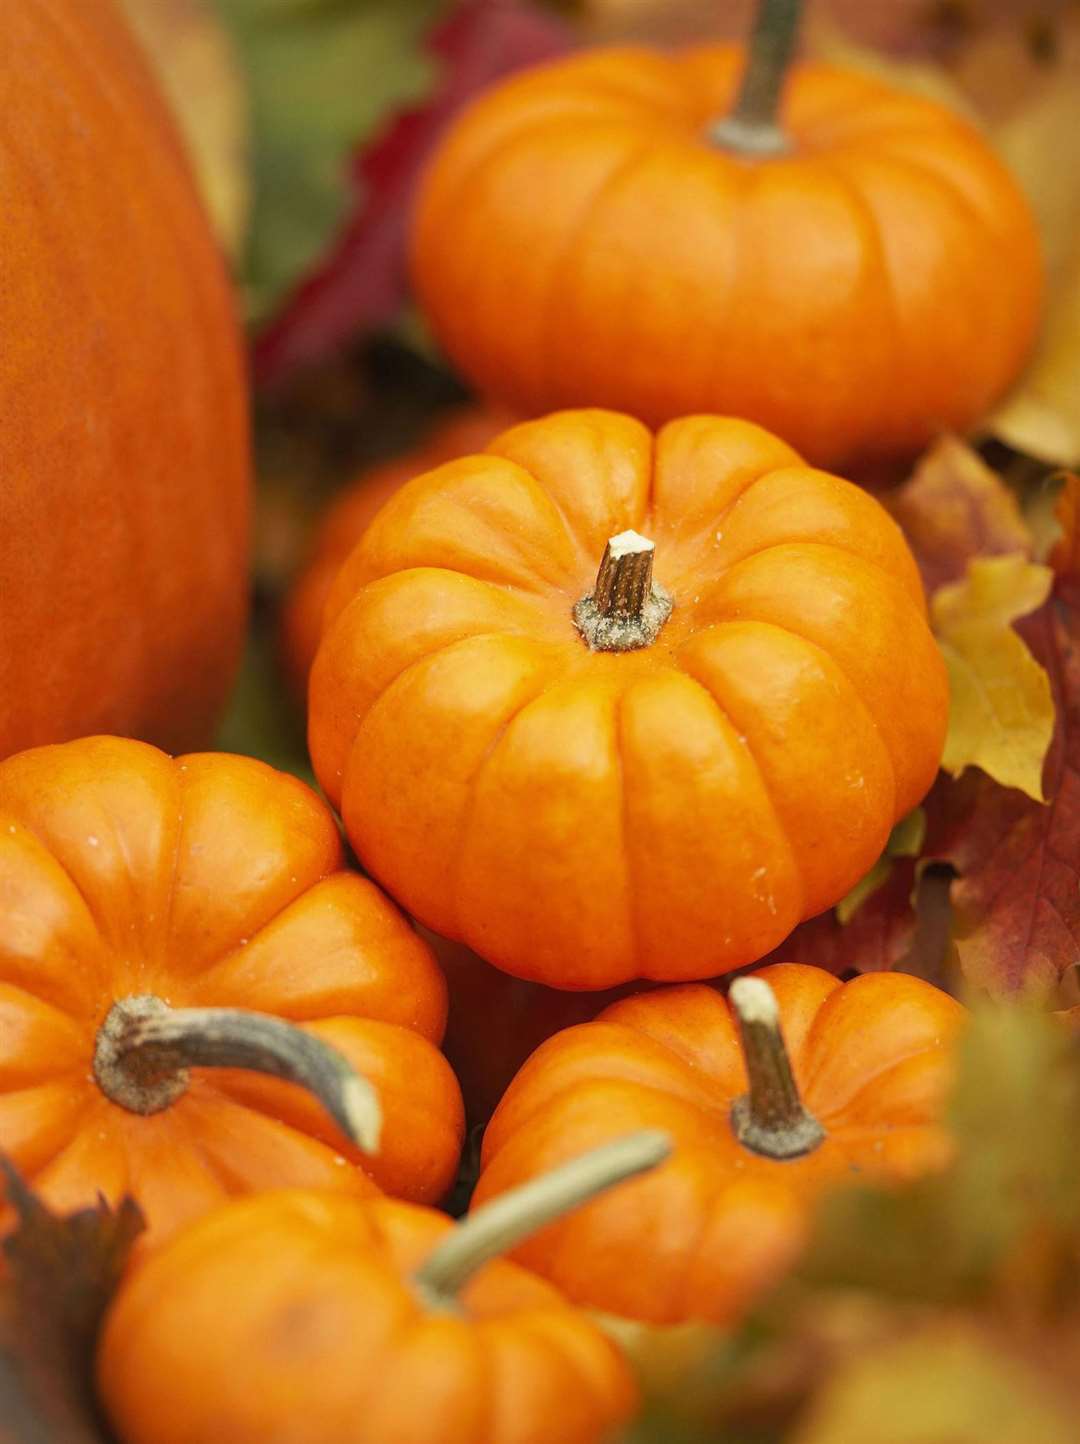 It's pumpkin picking season